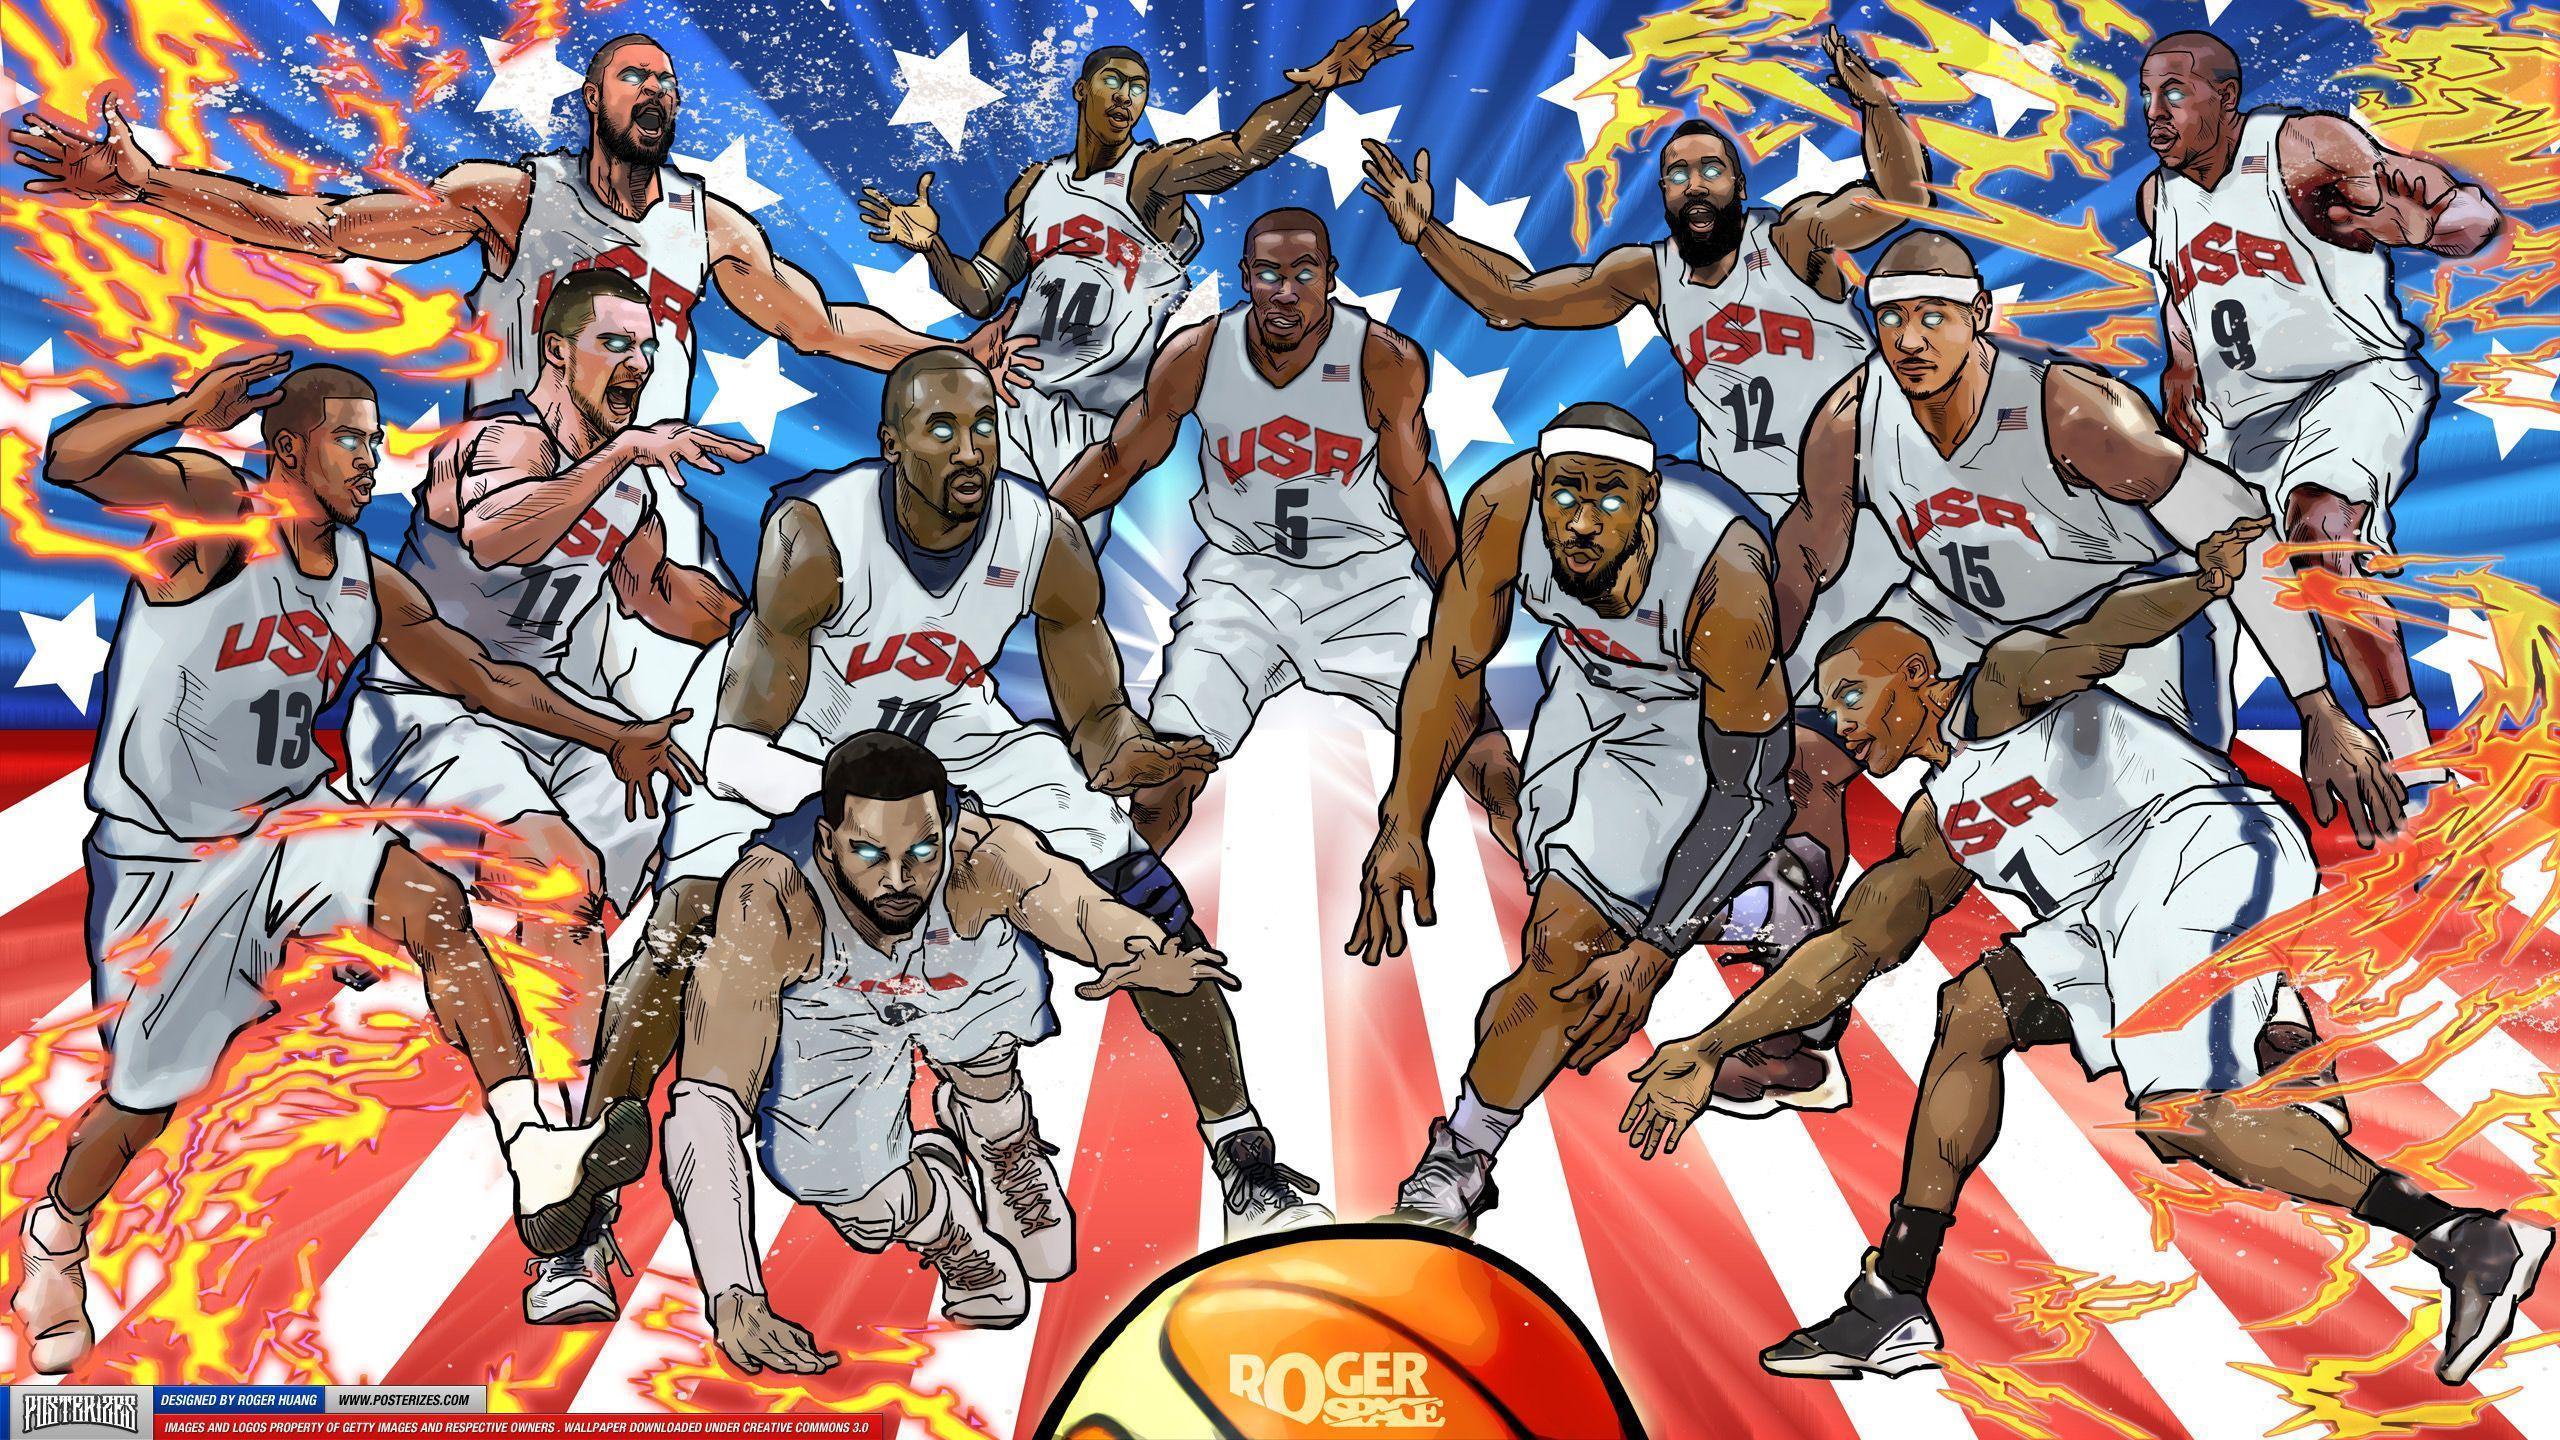 Best HD Nba Wallpaper. Happy new year 2015. NBA